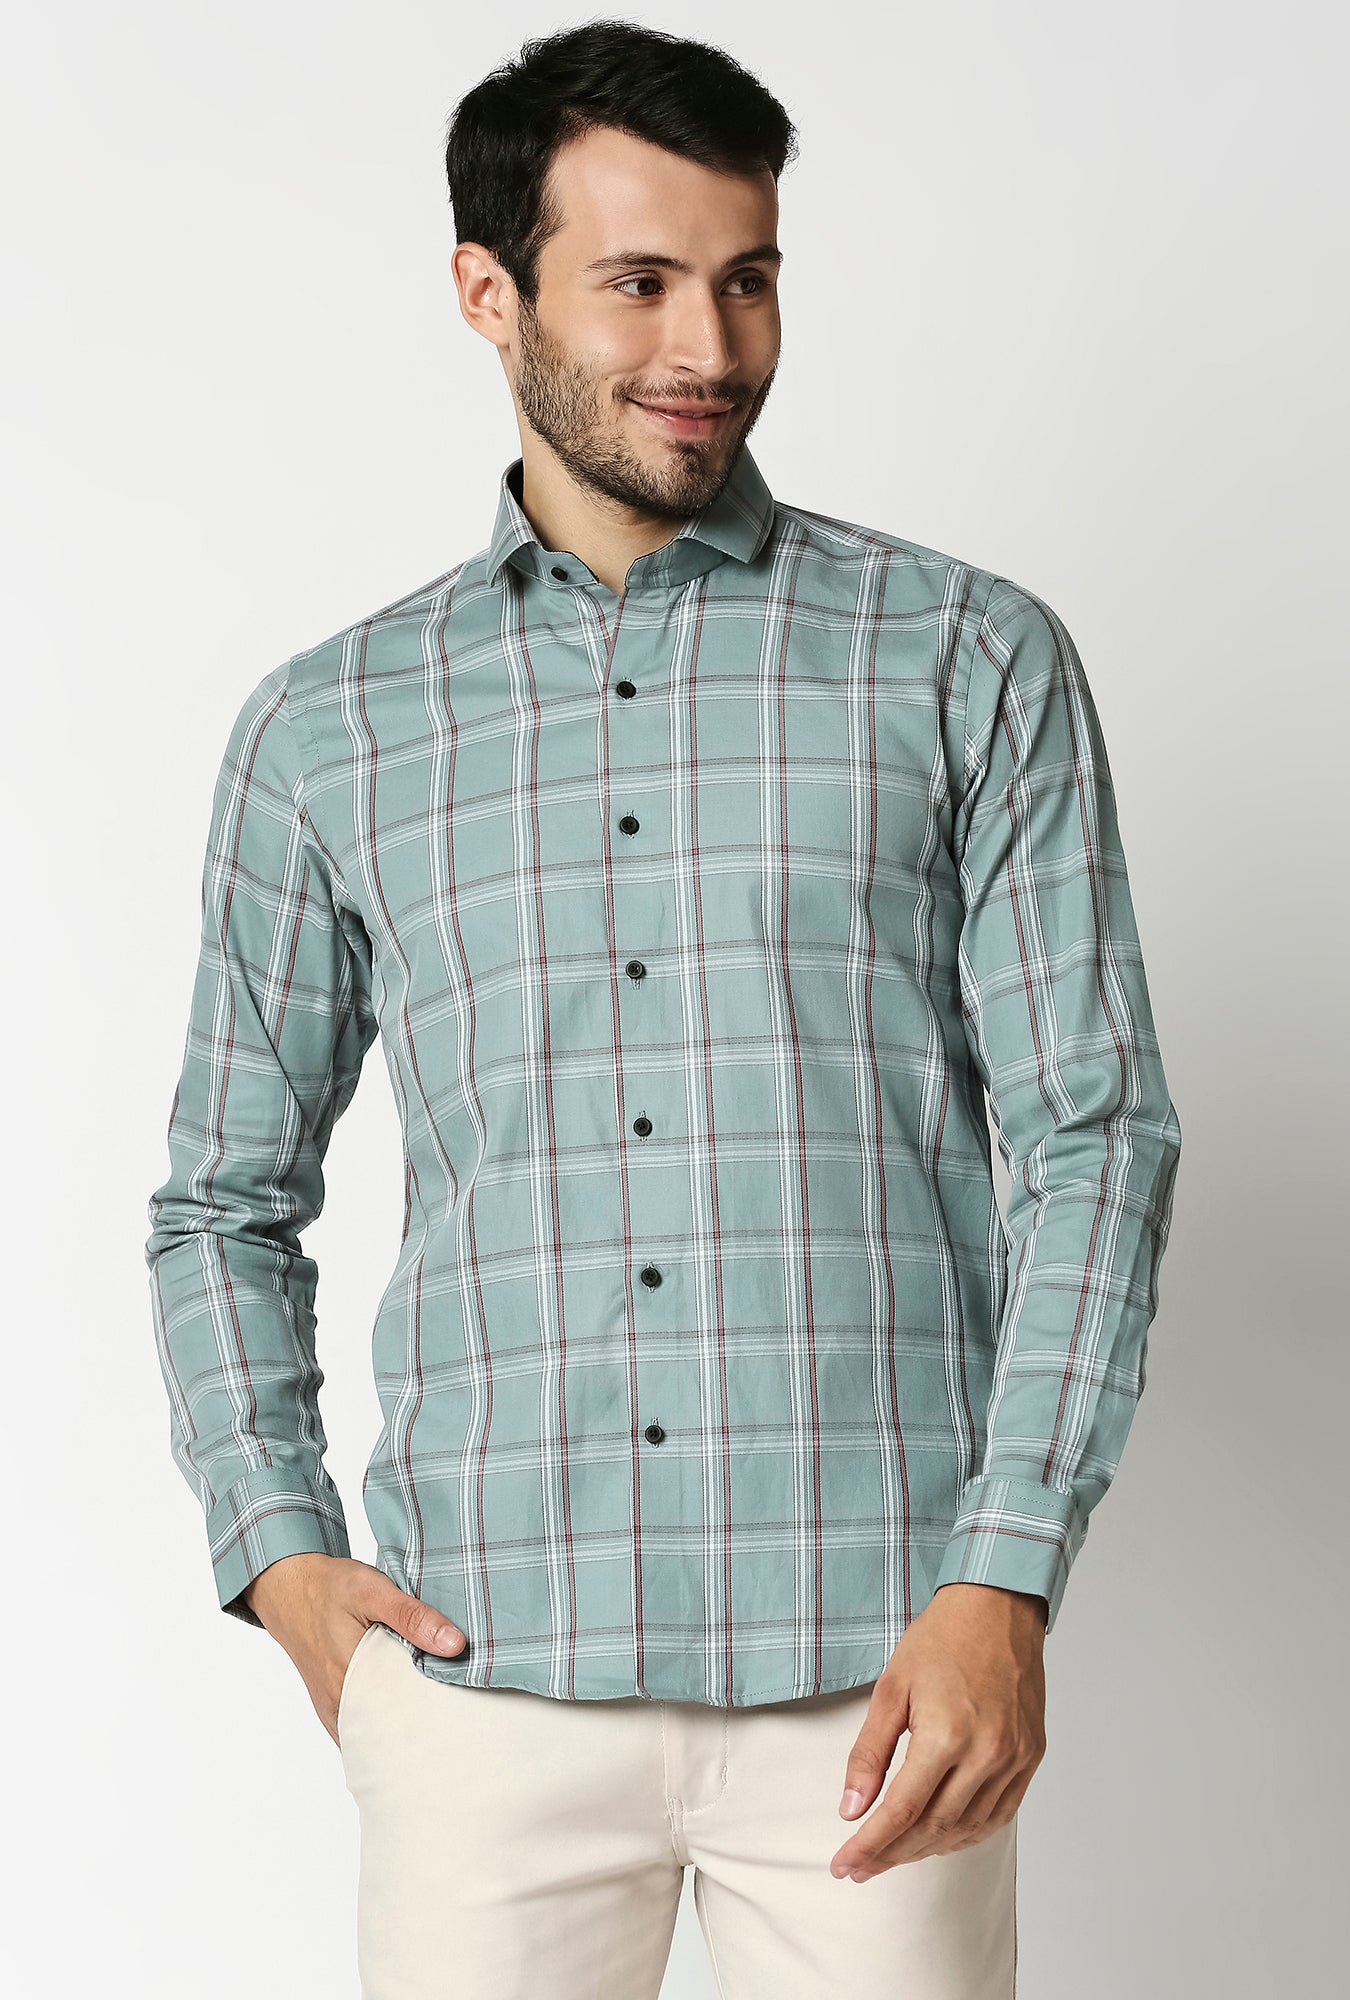 Fostino Checks Green Full Sleeves Shirt - Fostino - Shirts